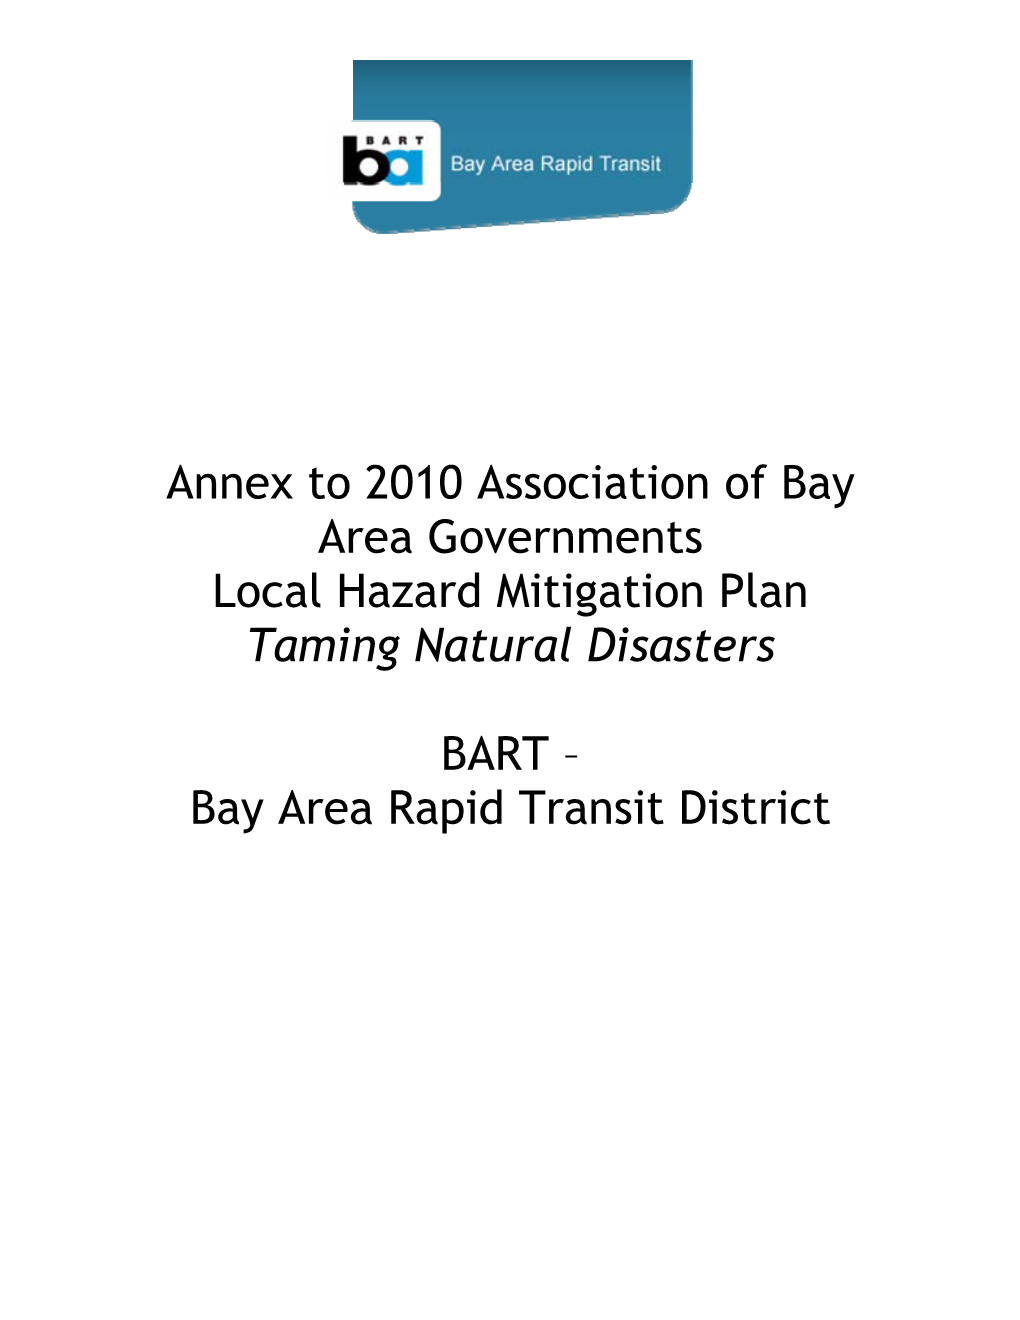 BART – Bay Area Rapid Transit District